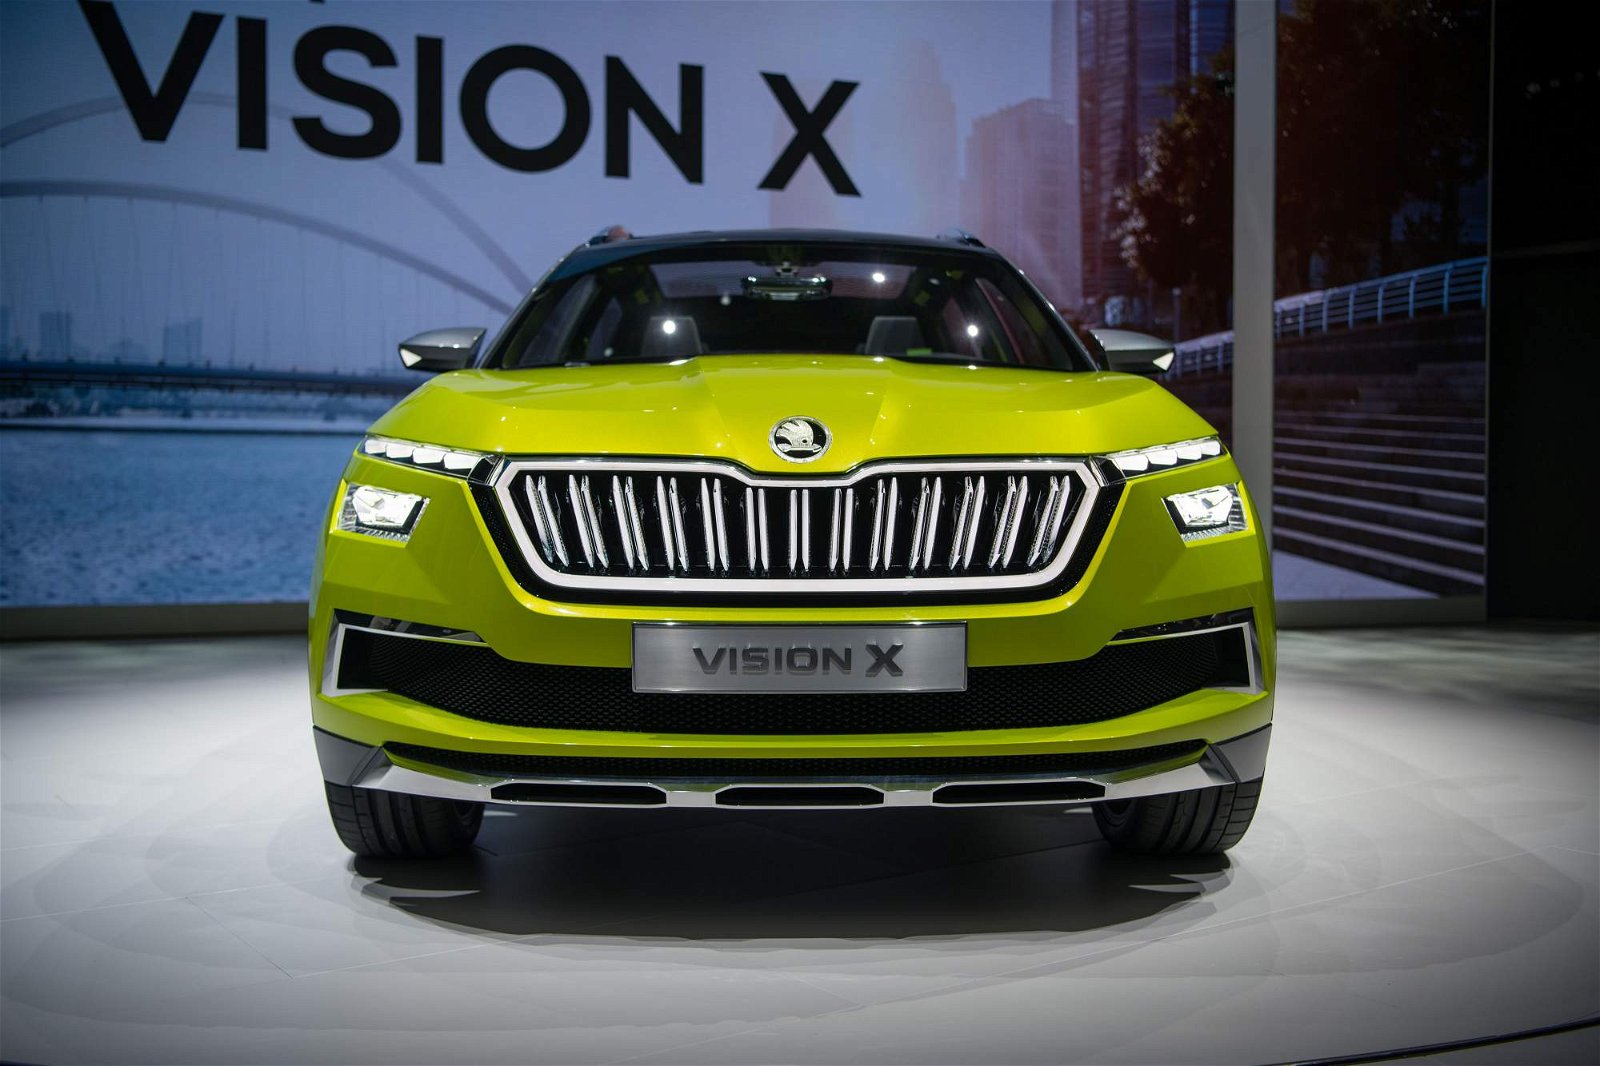 Skoda-Vision-X-concept-at-Geneva-Motor-Show-8